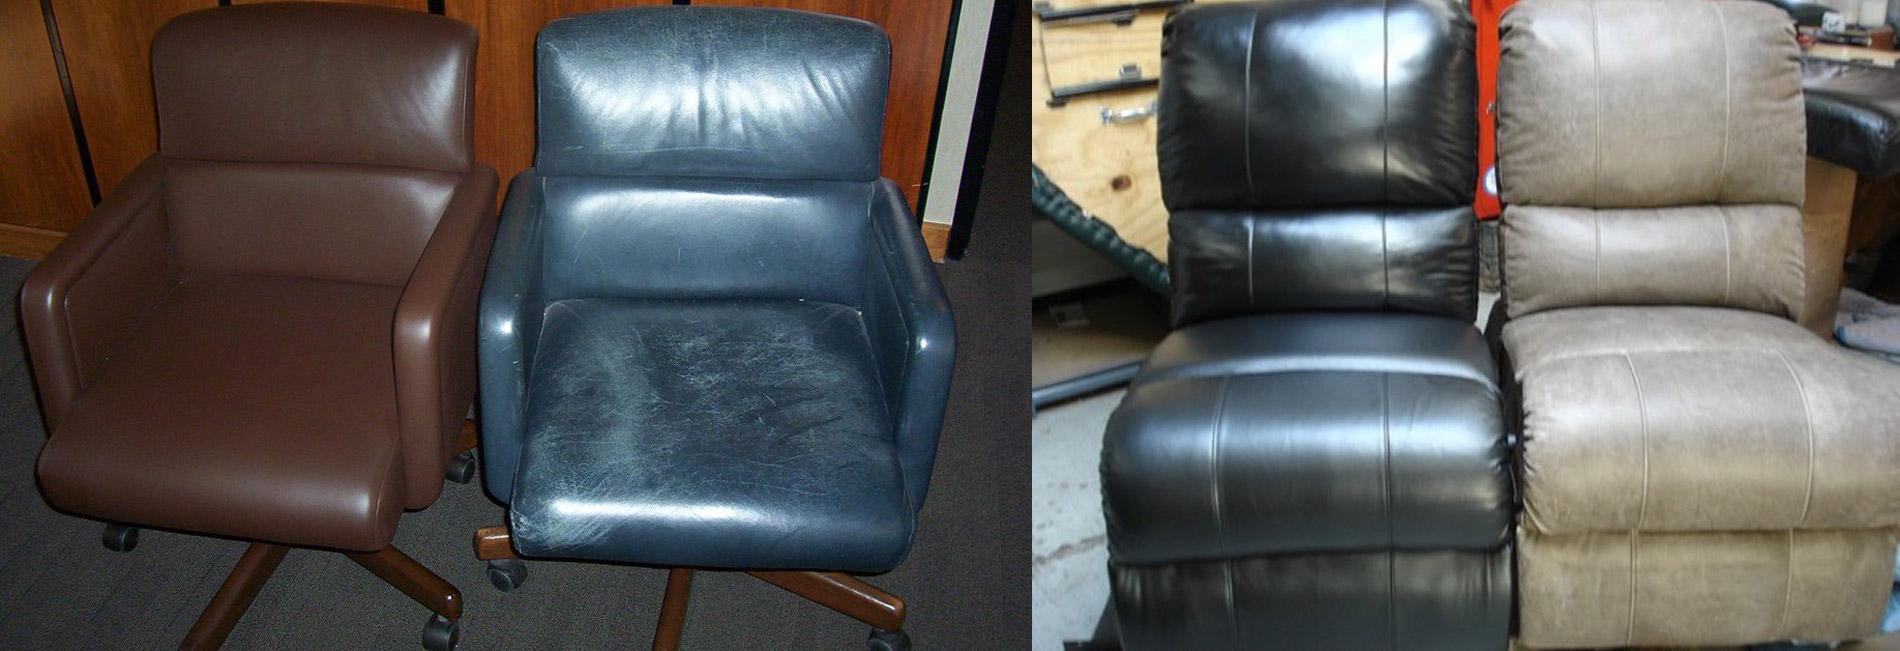 San Diego Furniture Leather Repair, Refurbish Leather Chair